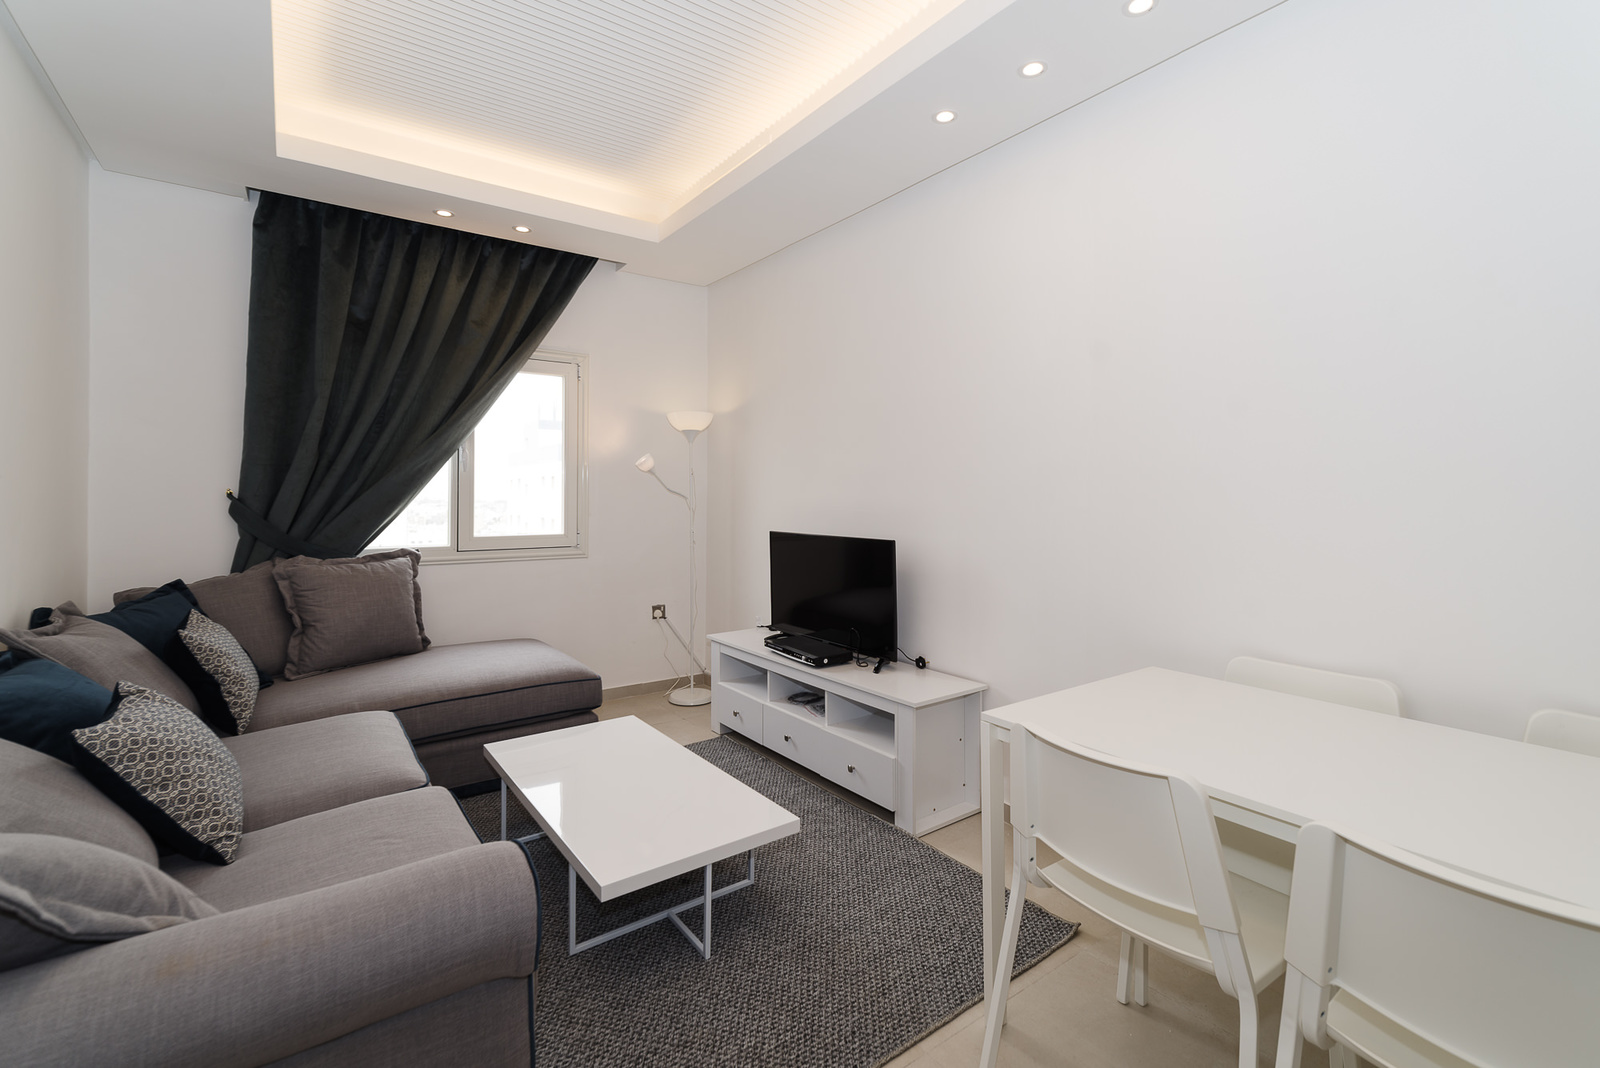 Sabah Al Salem – nice small, furnished, two bedroom apartments w/gym